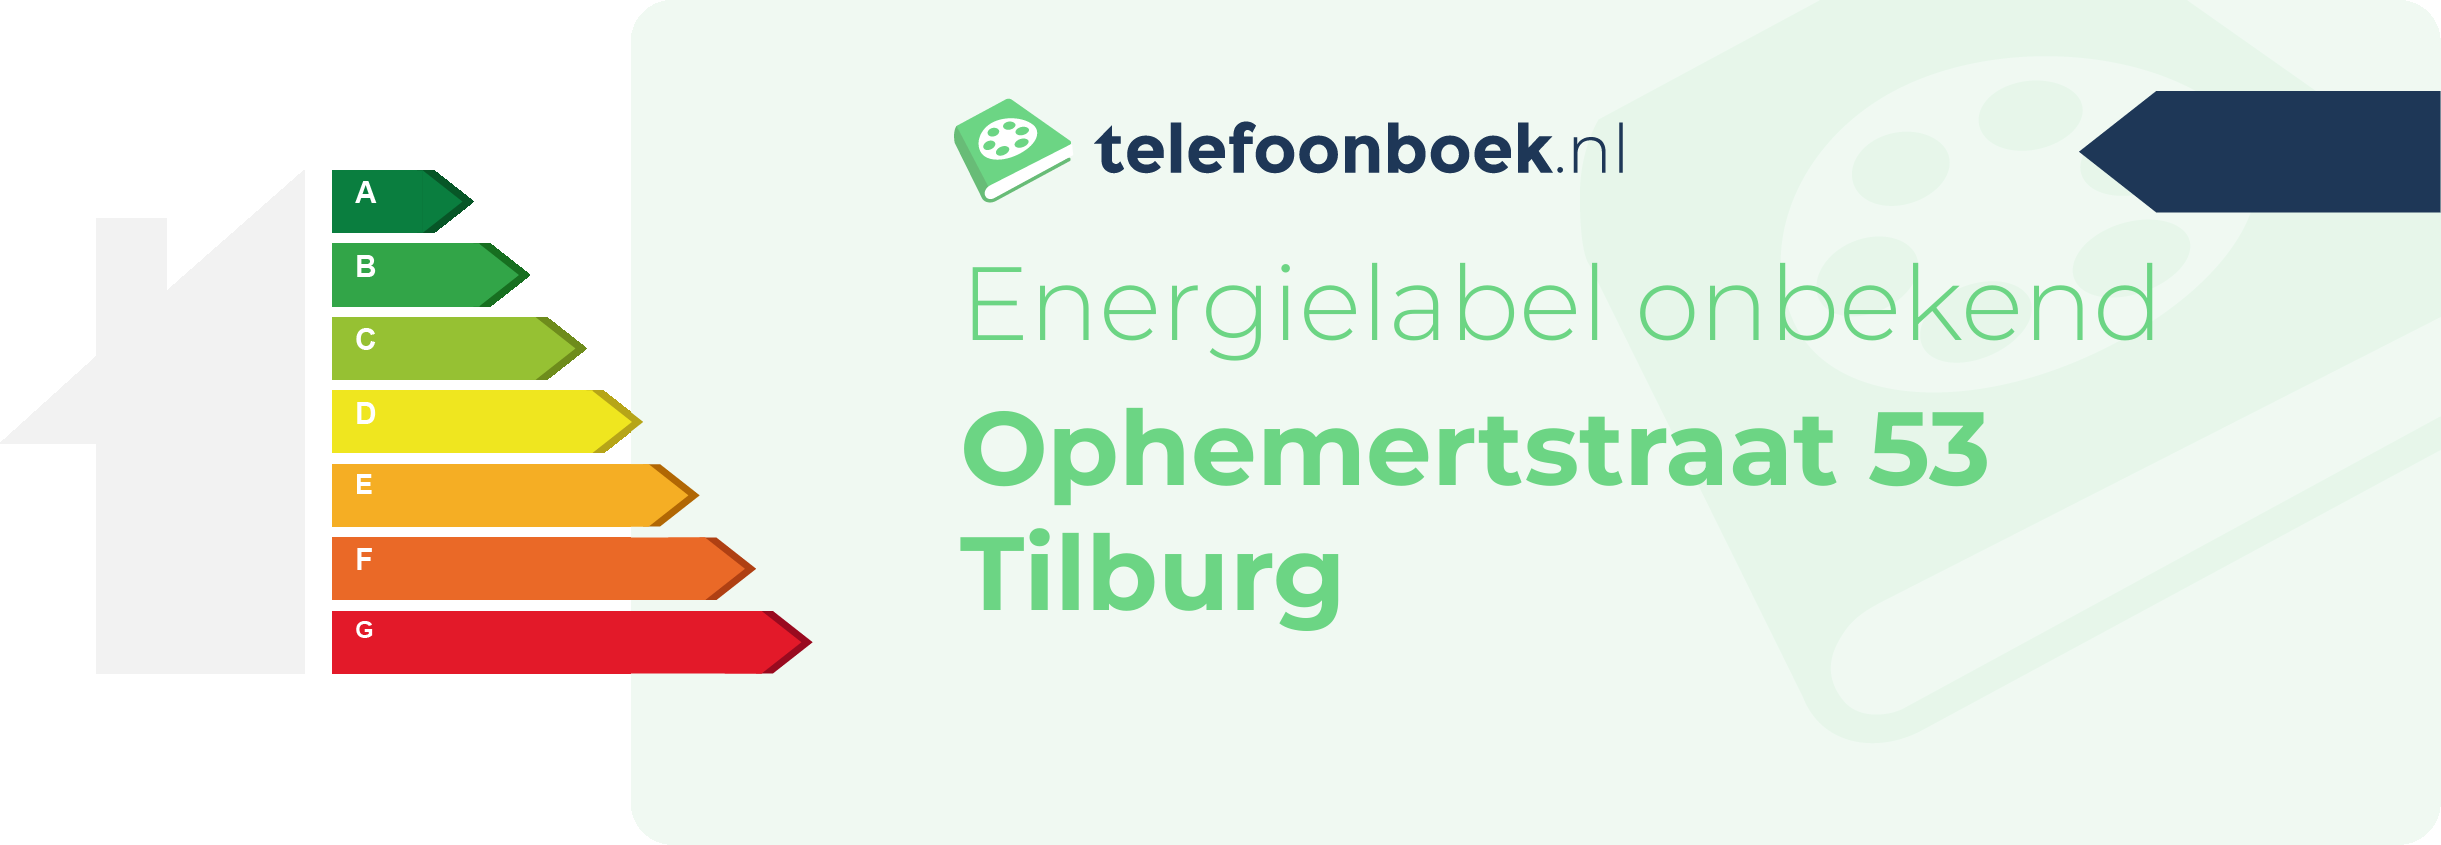 Energielabel Ophemertstraat 53 Tilburg